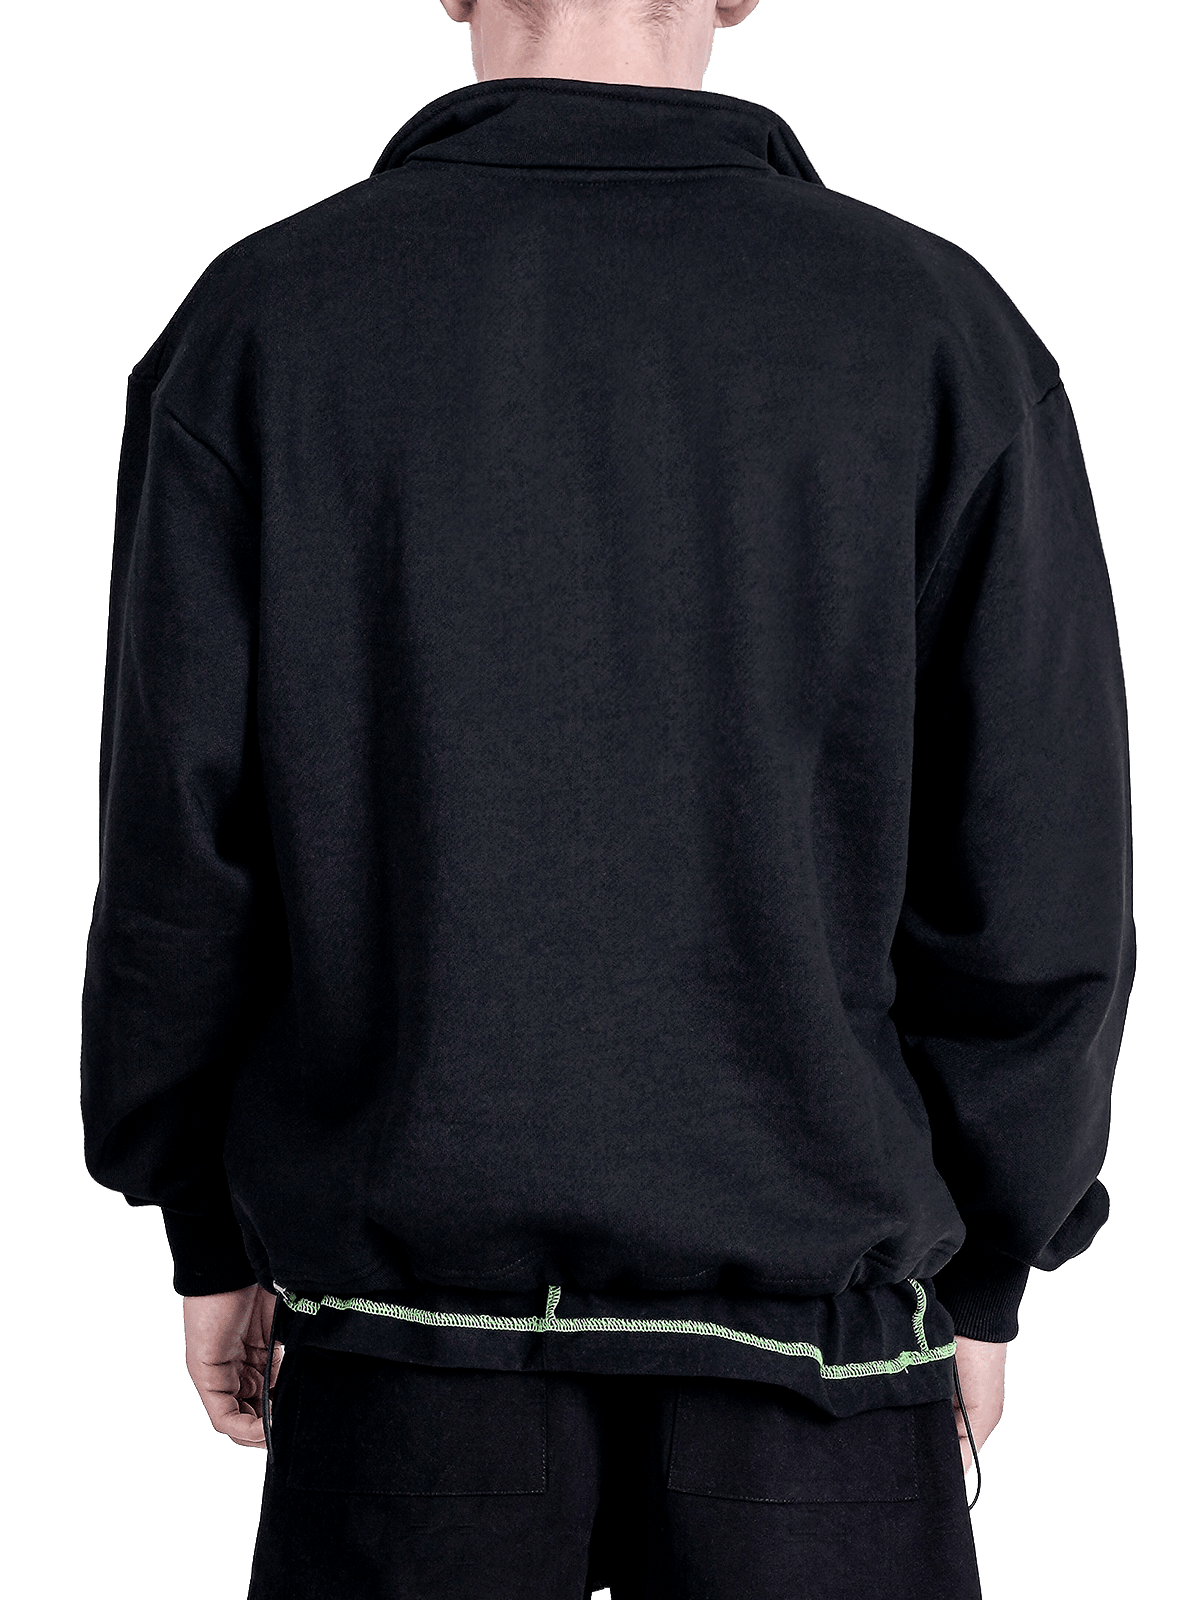 3/4 Zipper Sweater - Black